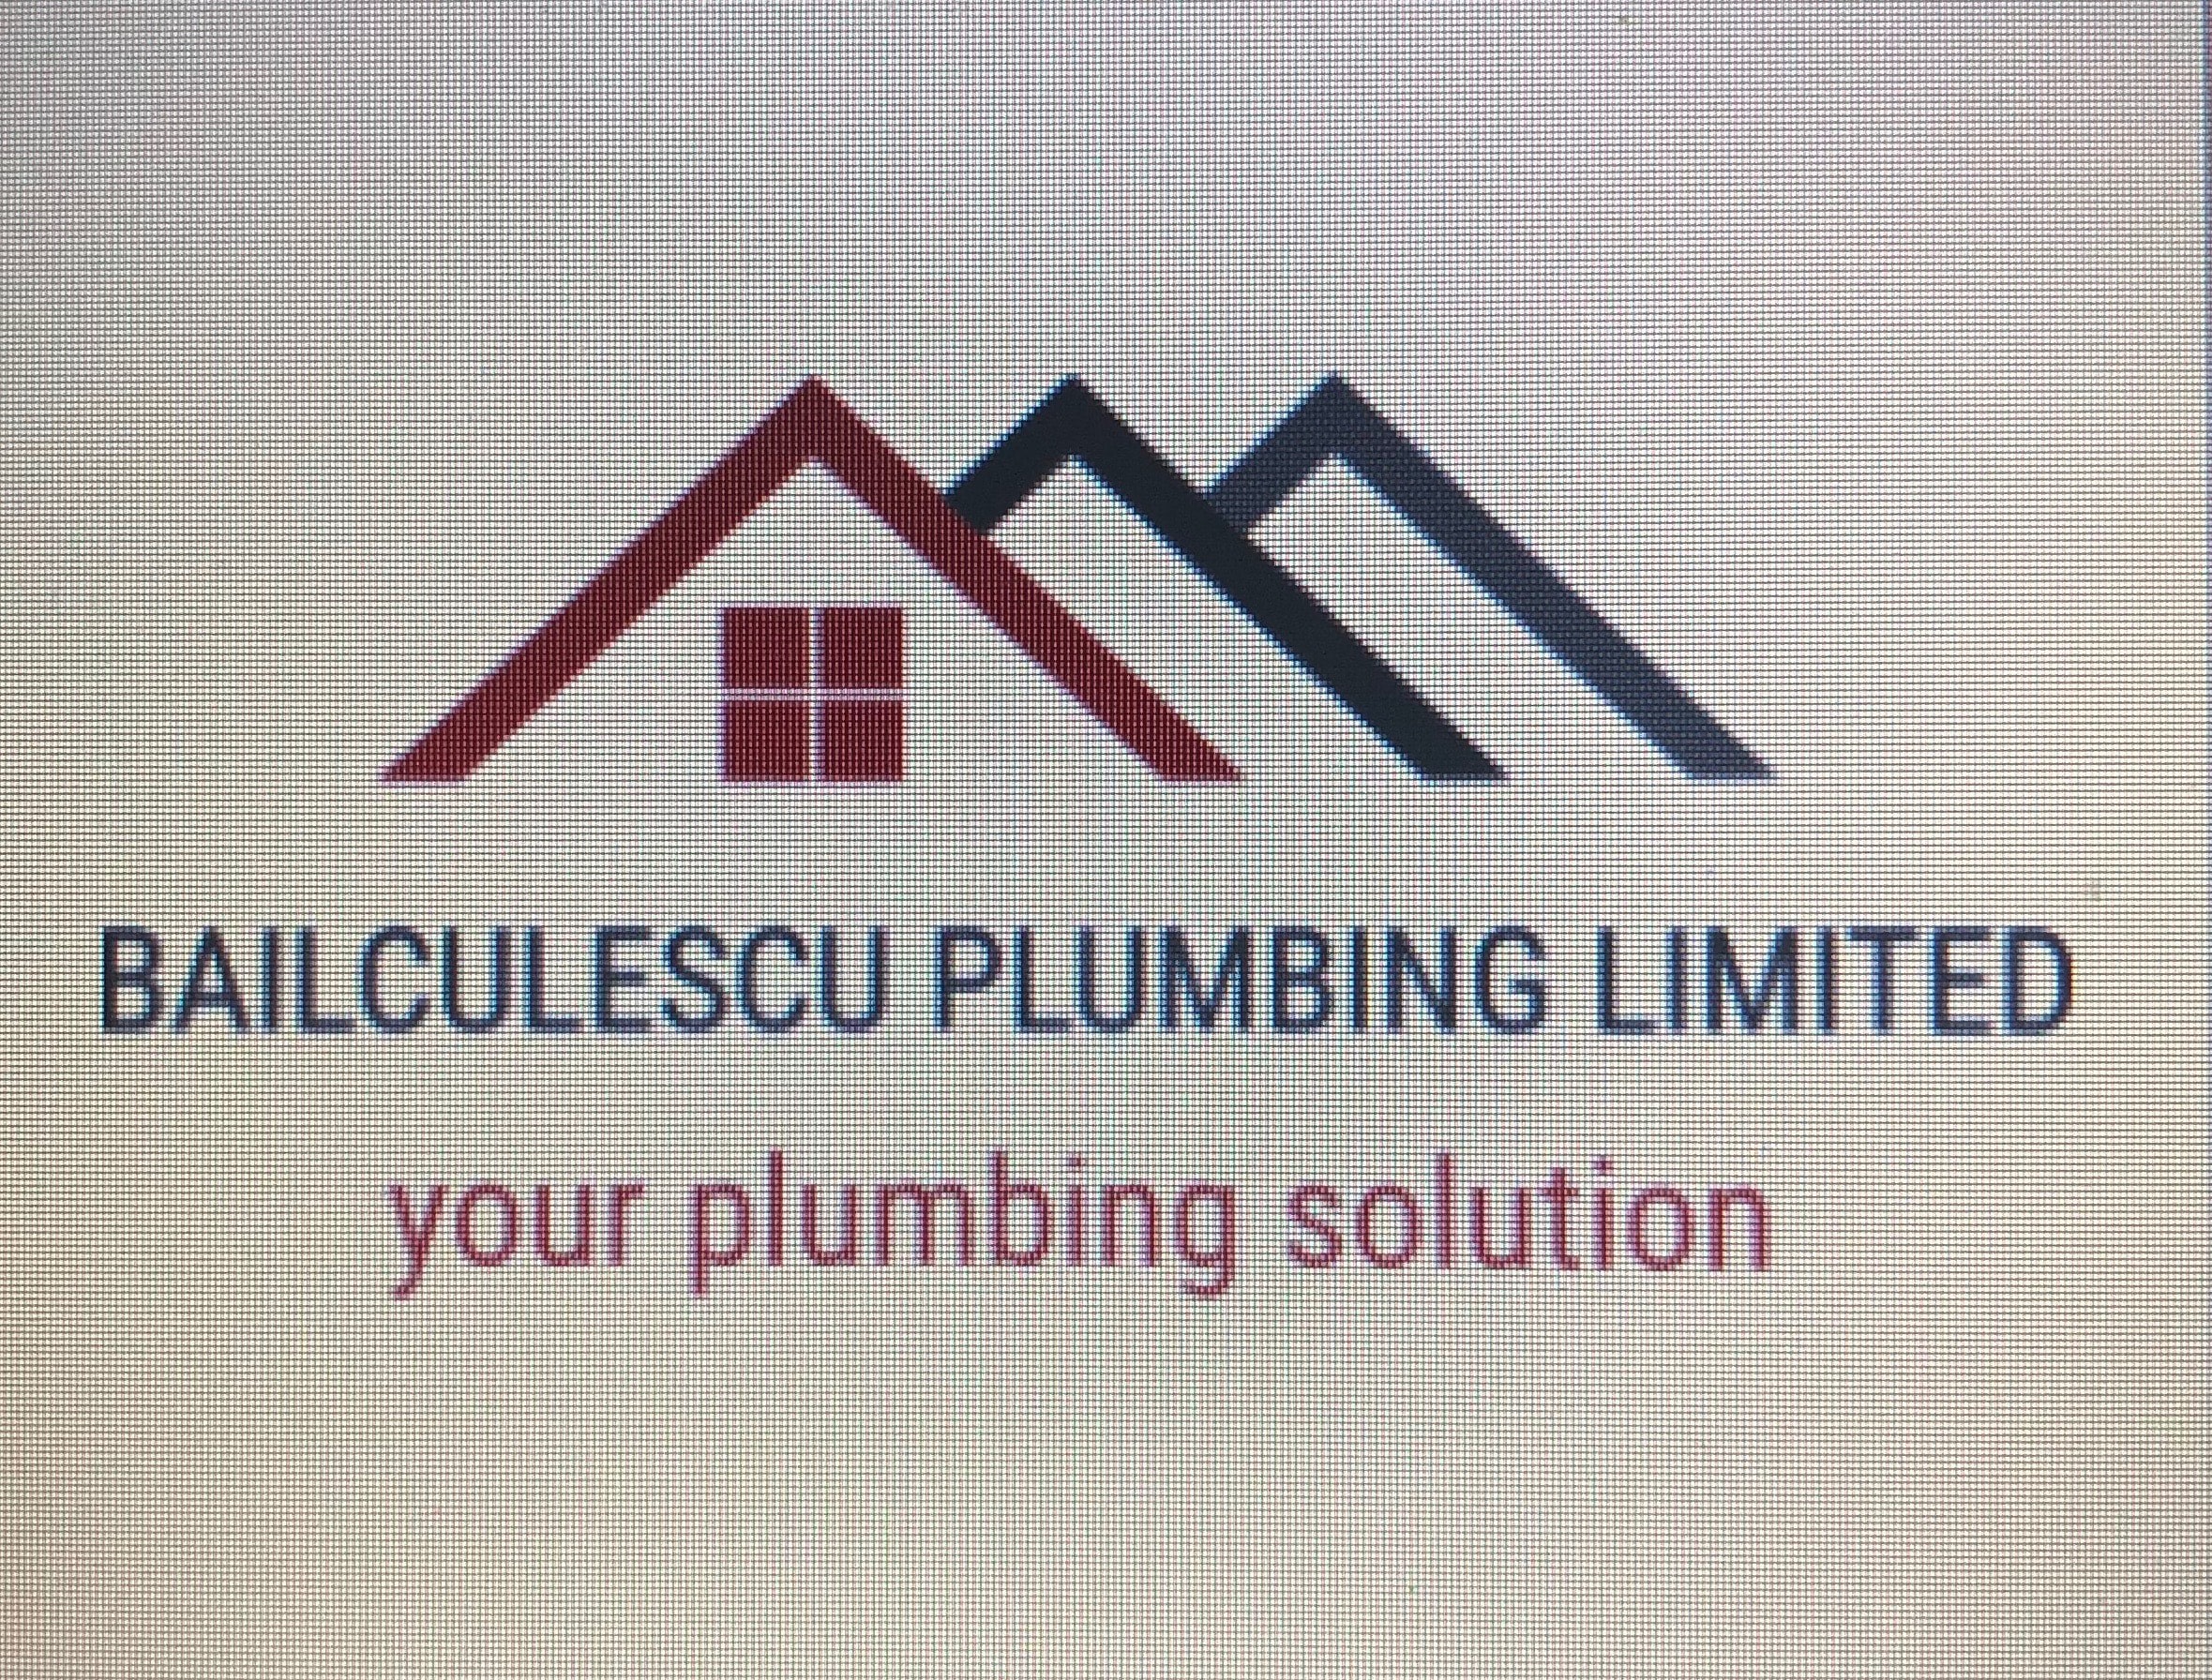 Bailculescu Plumbing Limited